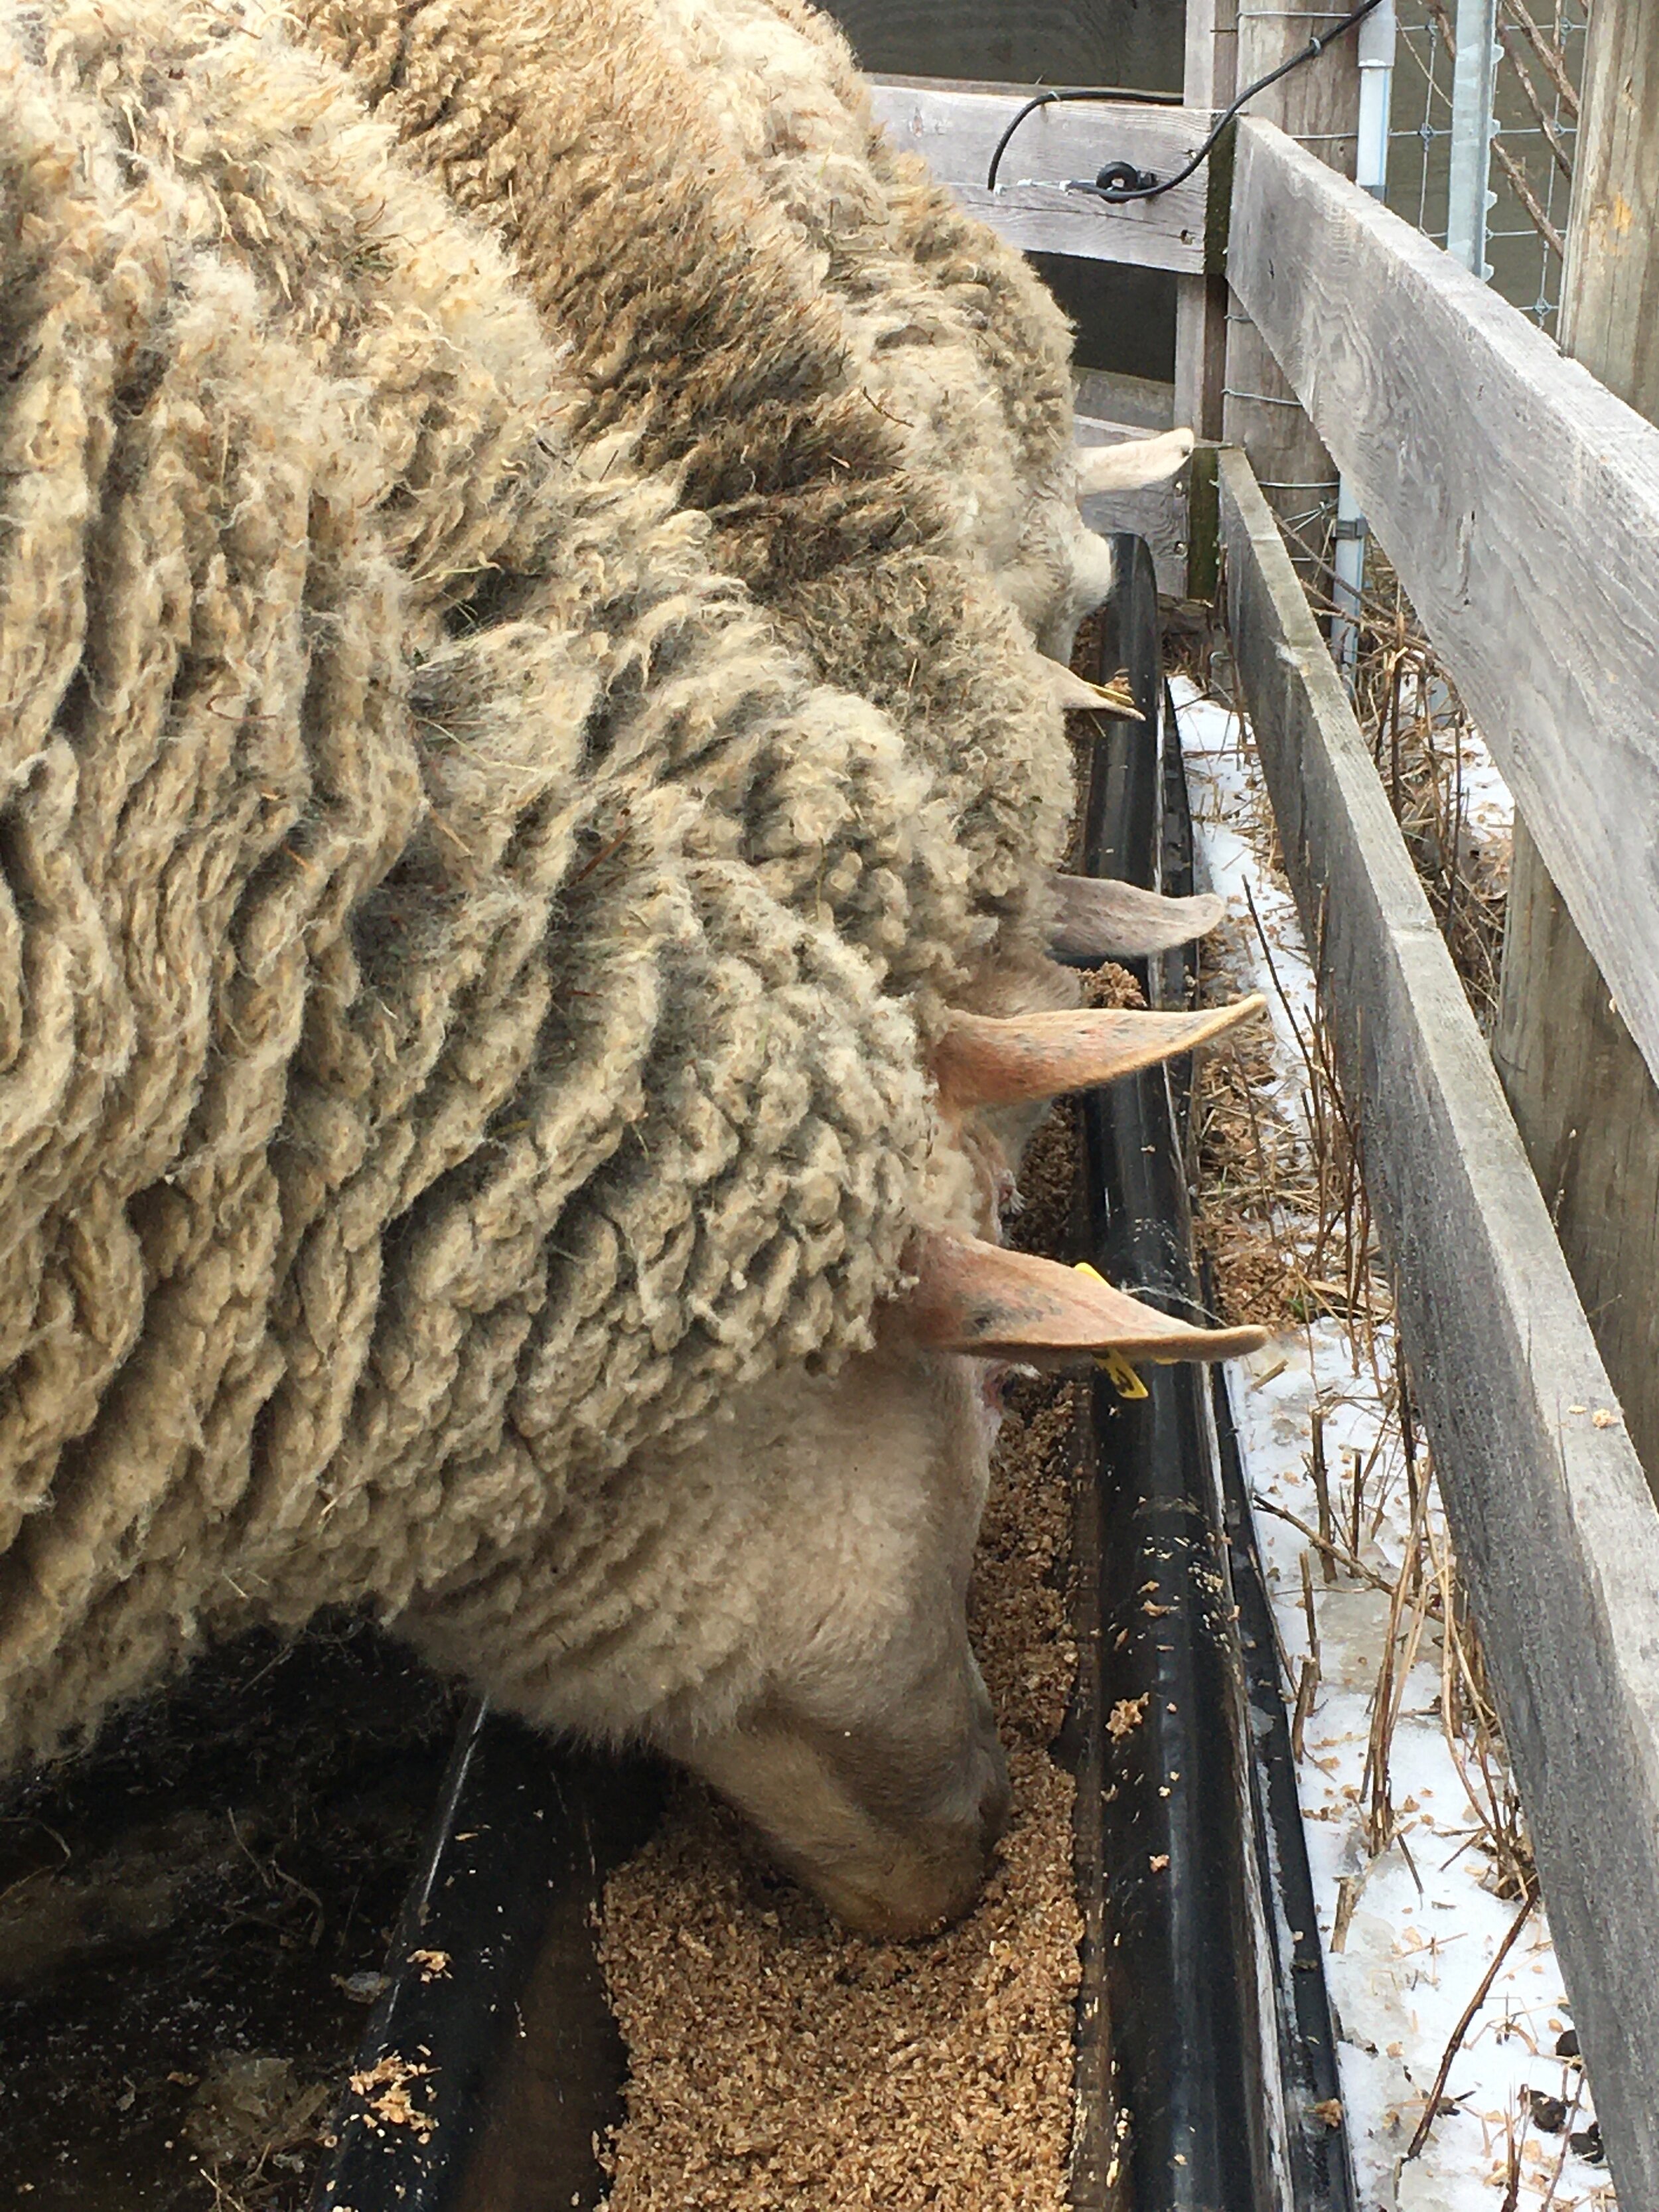 sheep eating grain.jpg